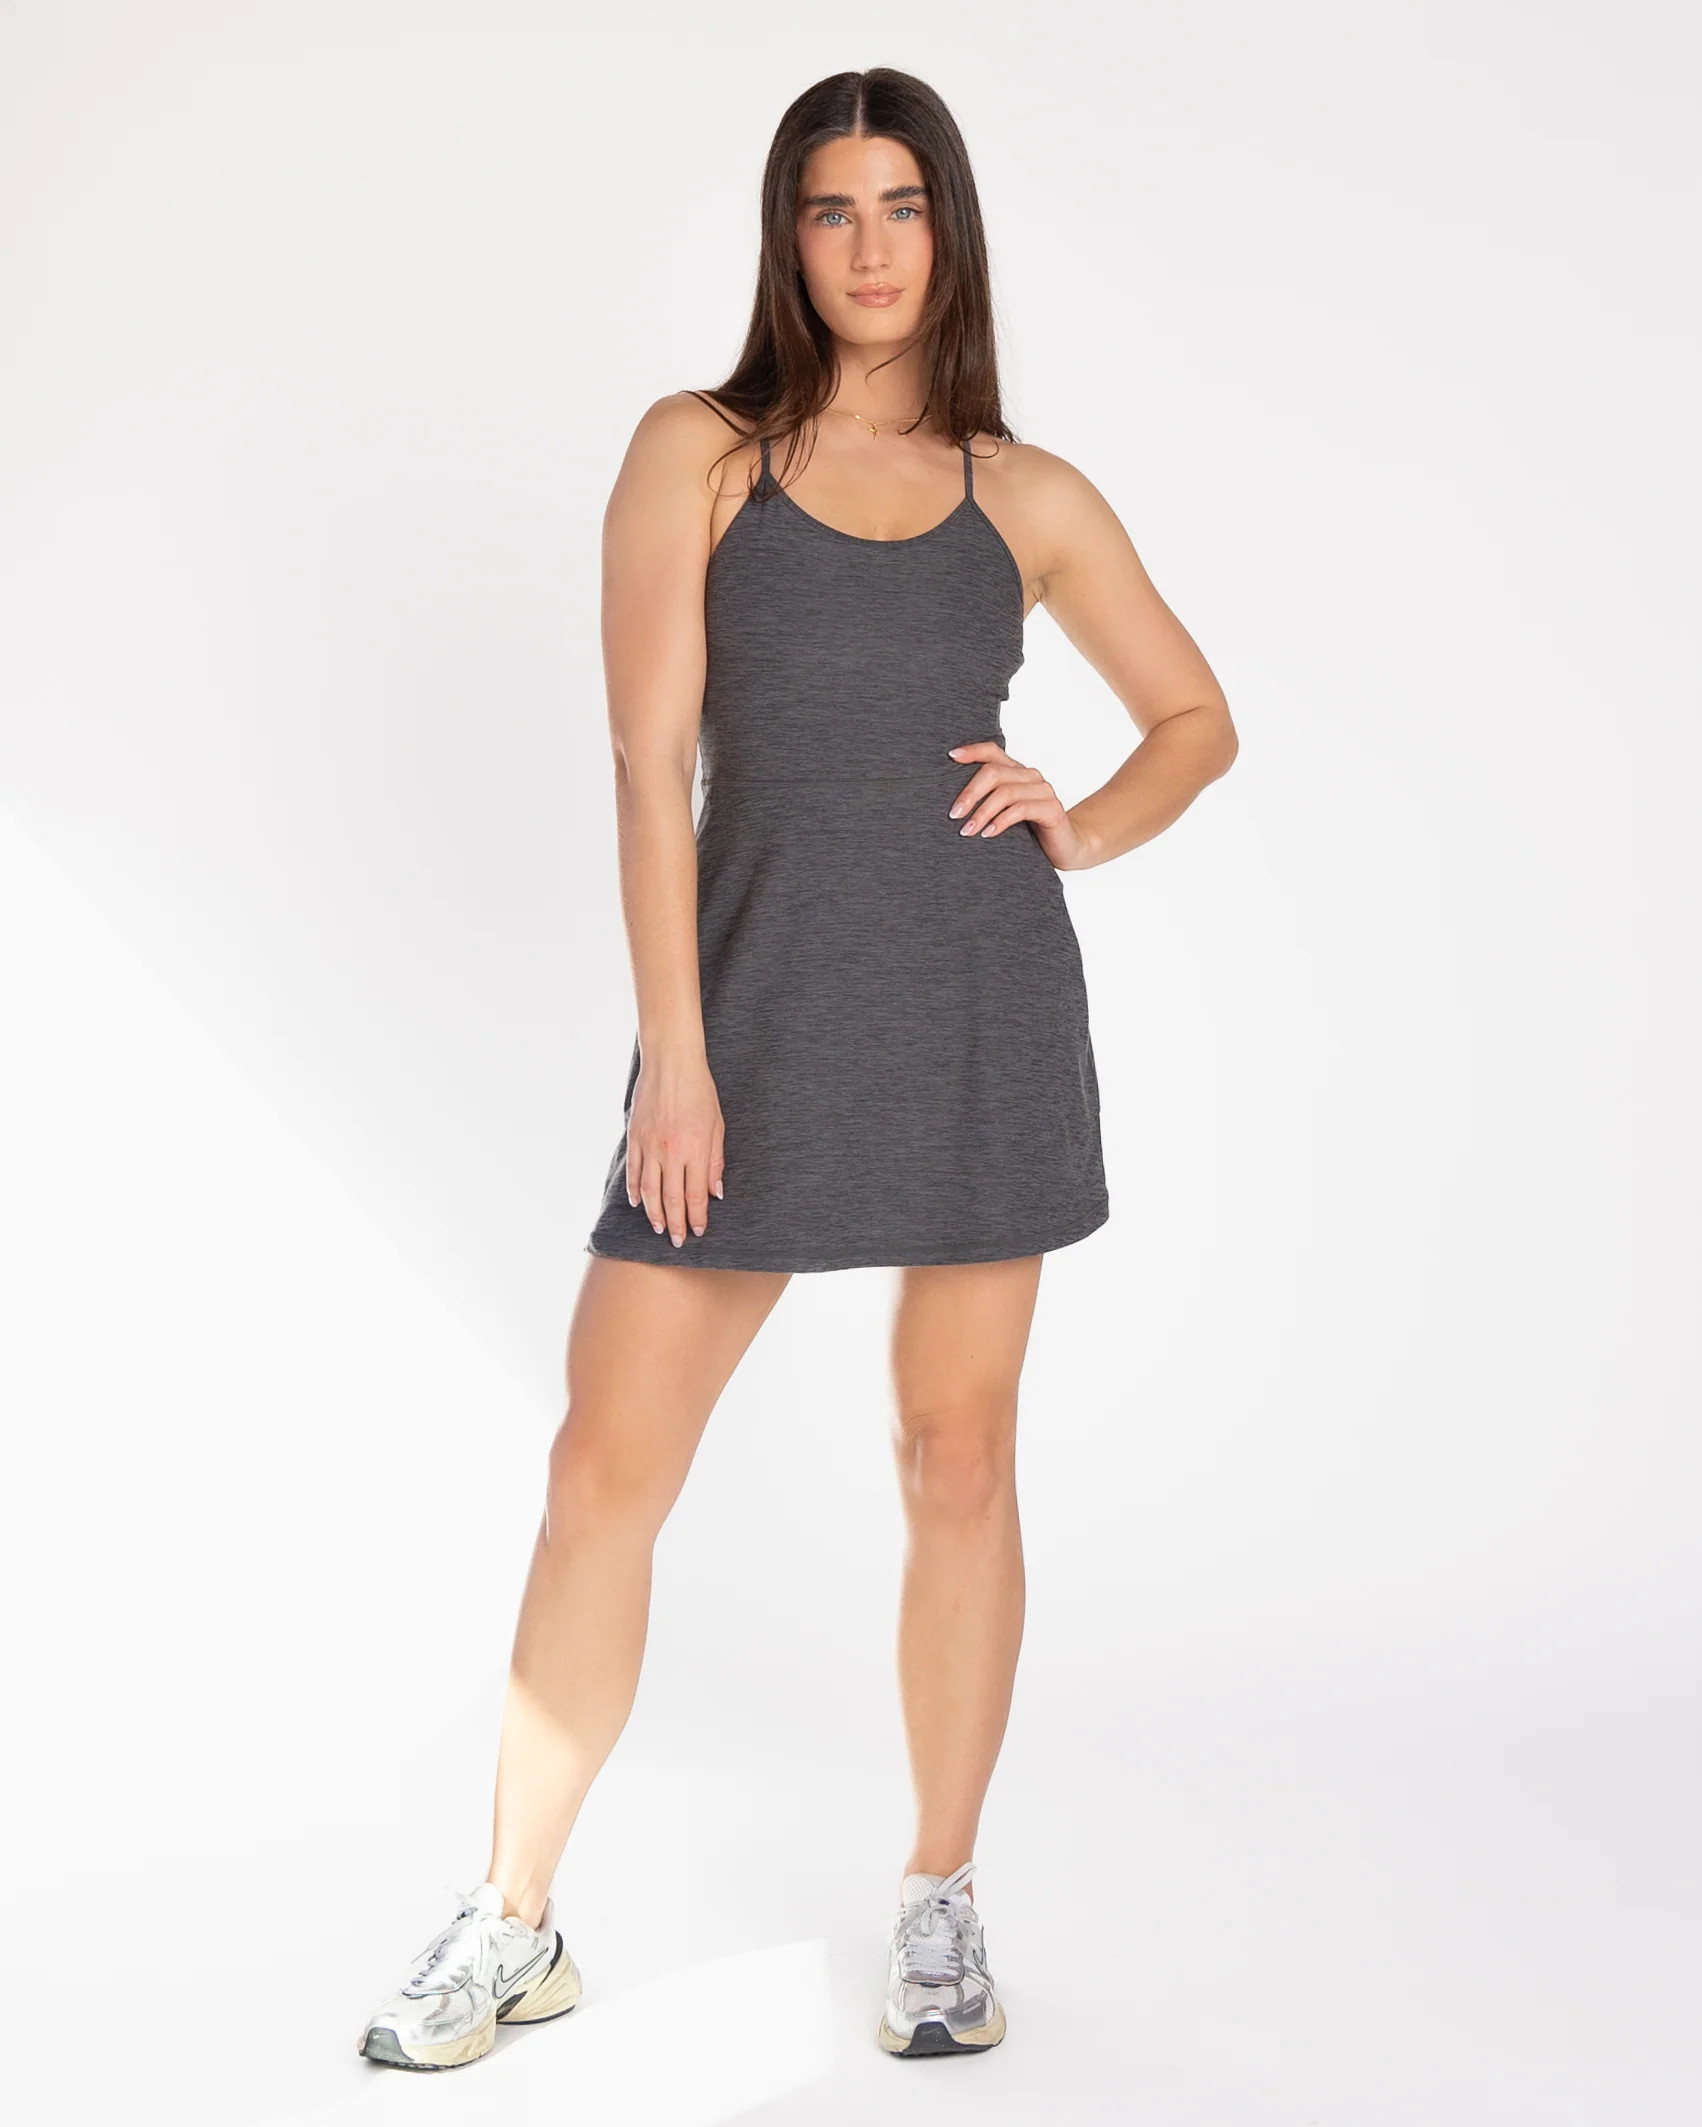 Dynamic Ava Dress - Heathered Magnet | Senita Athletics